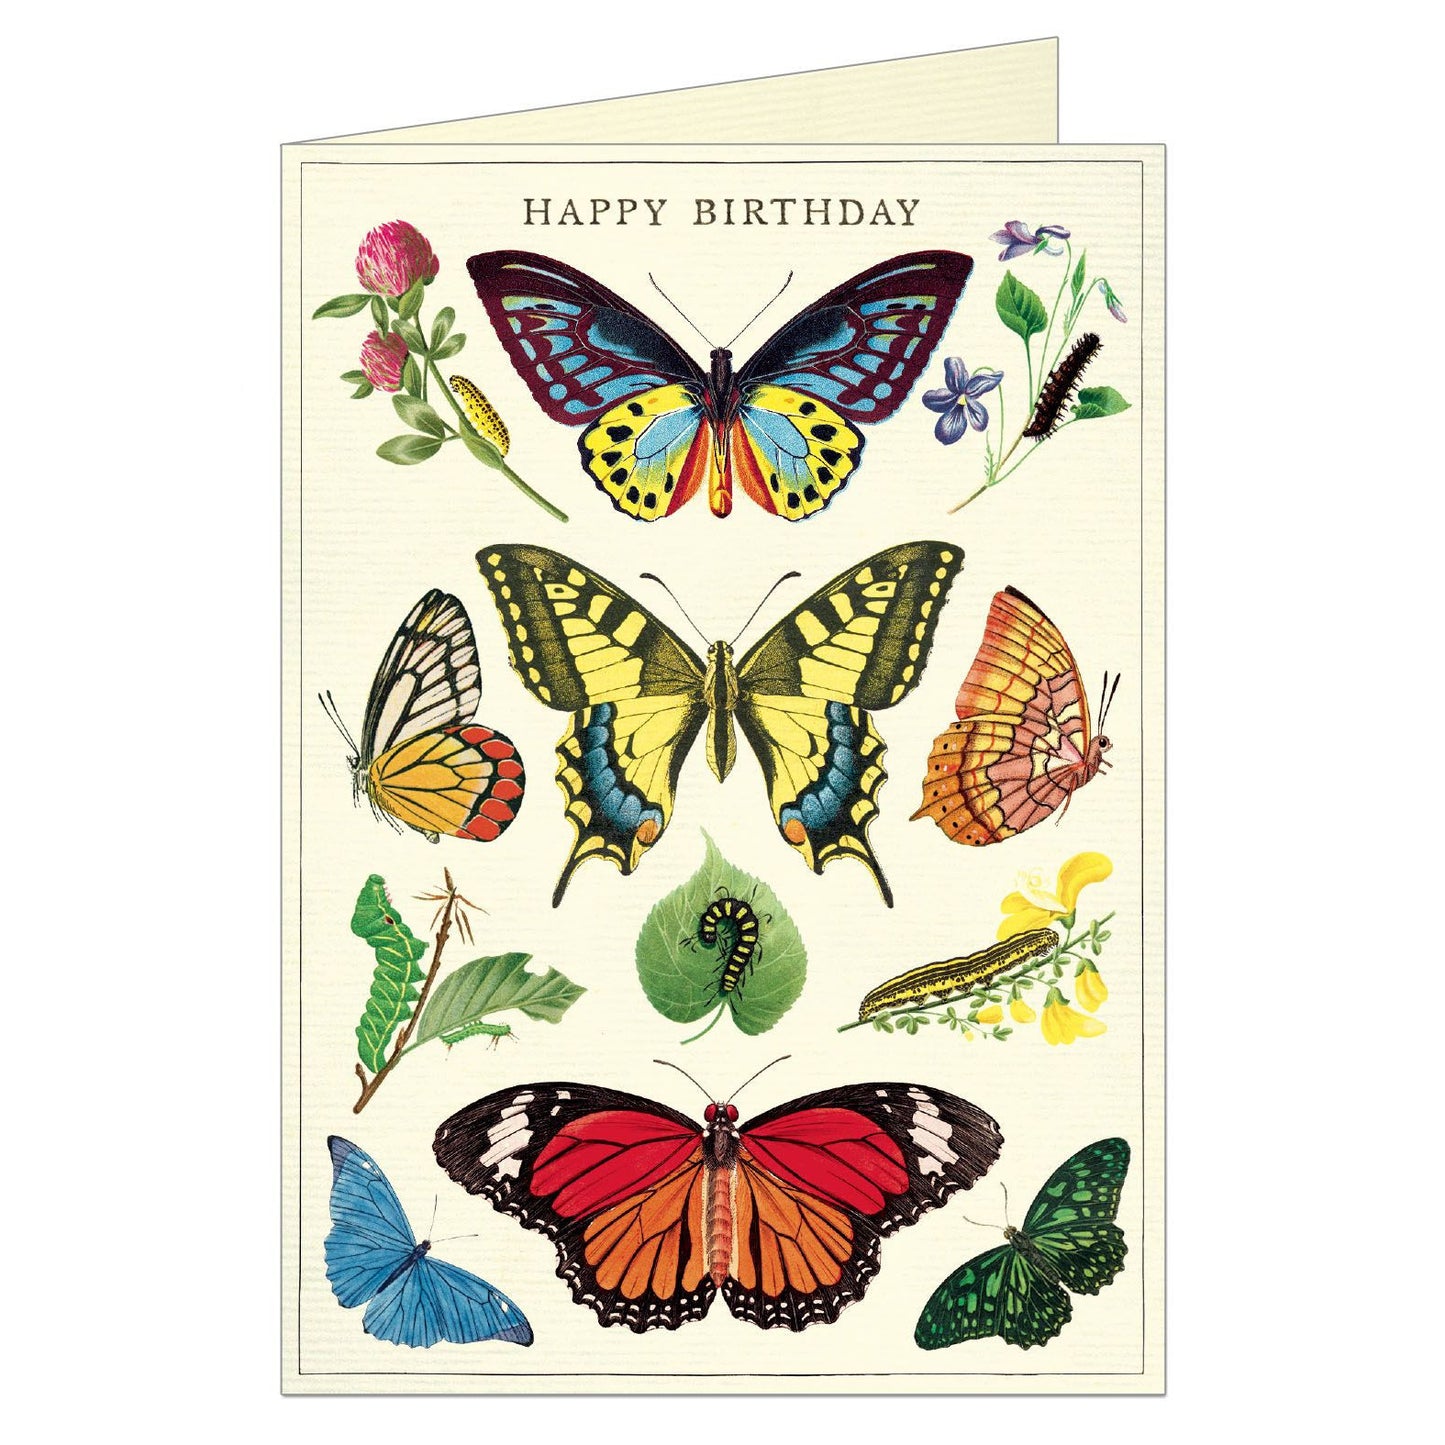 Cavallini & Co. Greeting Card - Happy Birthday Butterflies 2